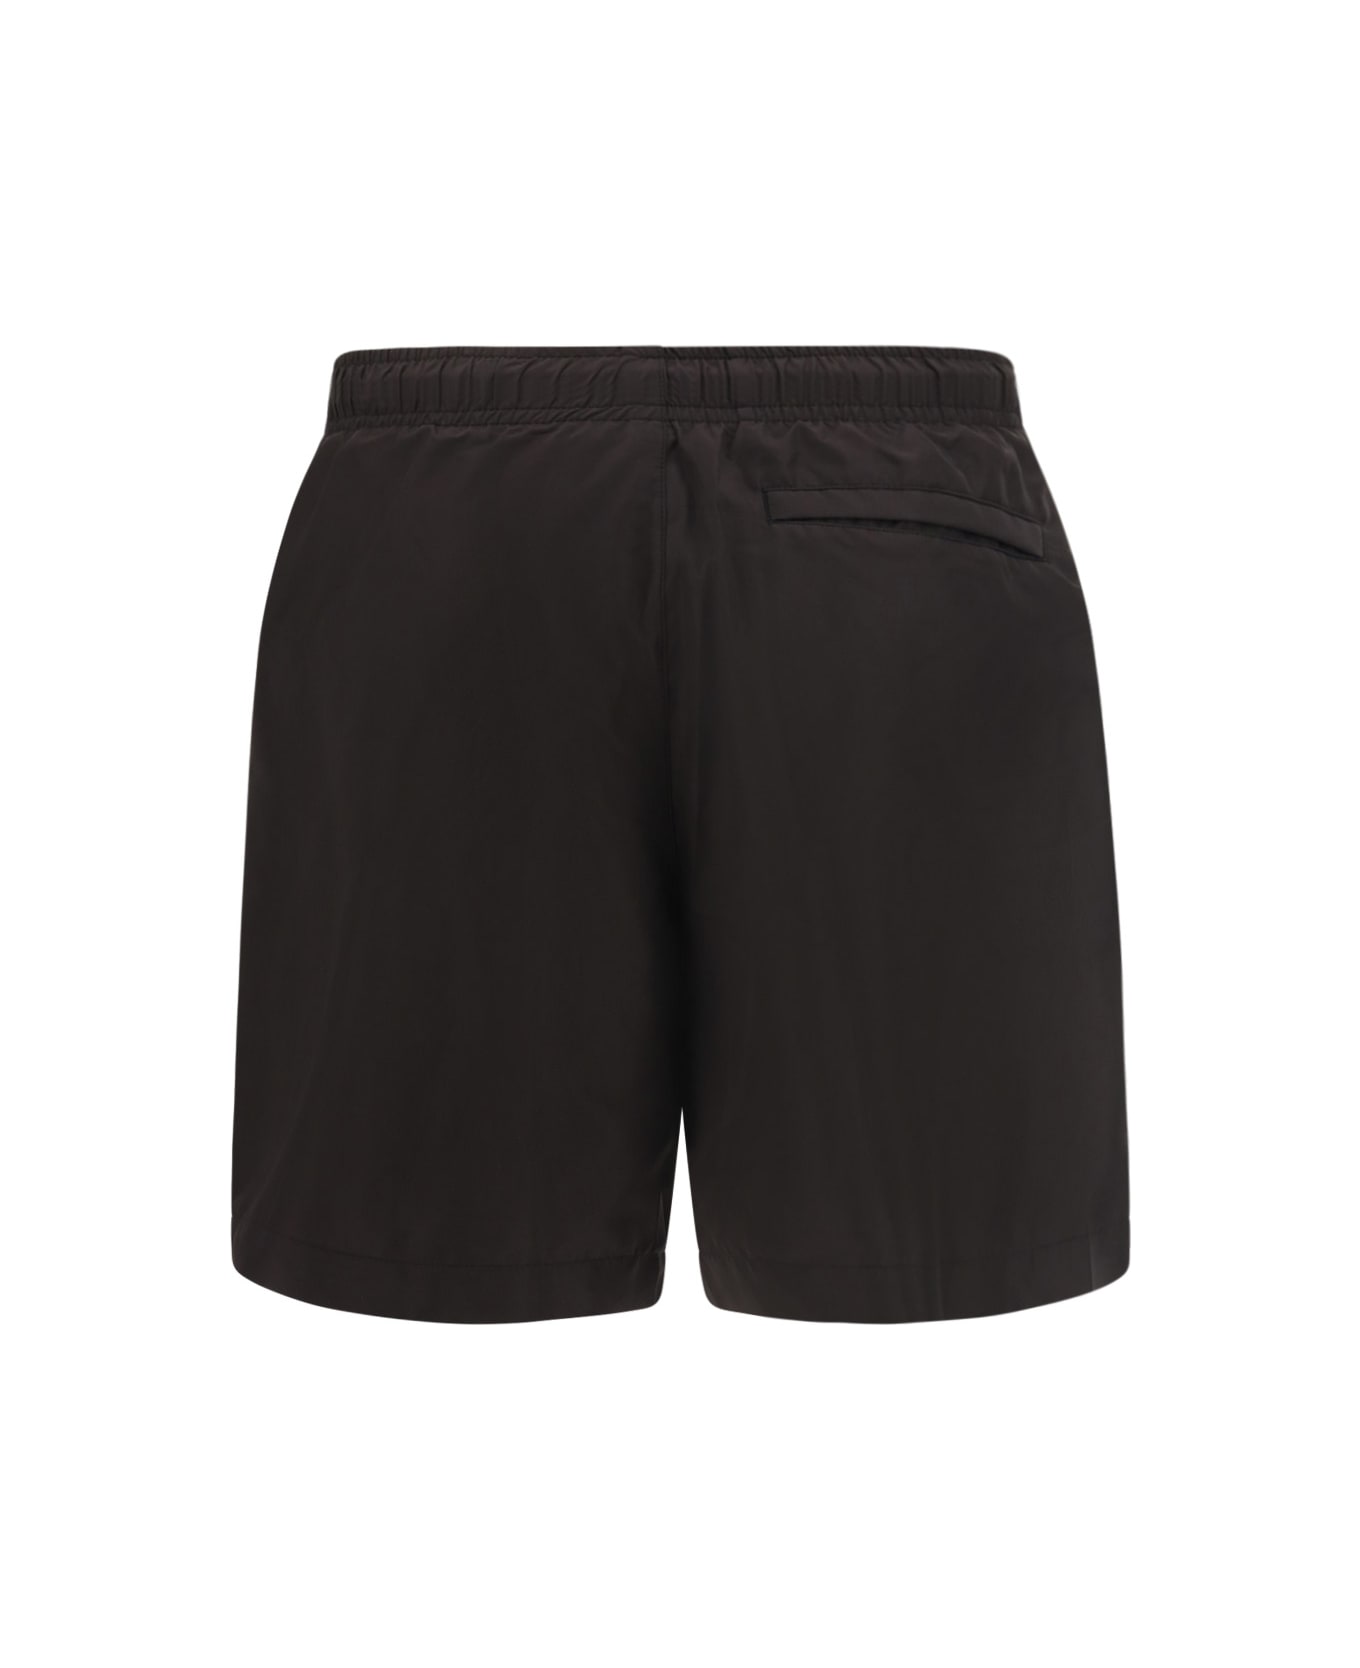 Givenchy Black Polyester Swimming Shorts - Black/white ショートパンツ